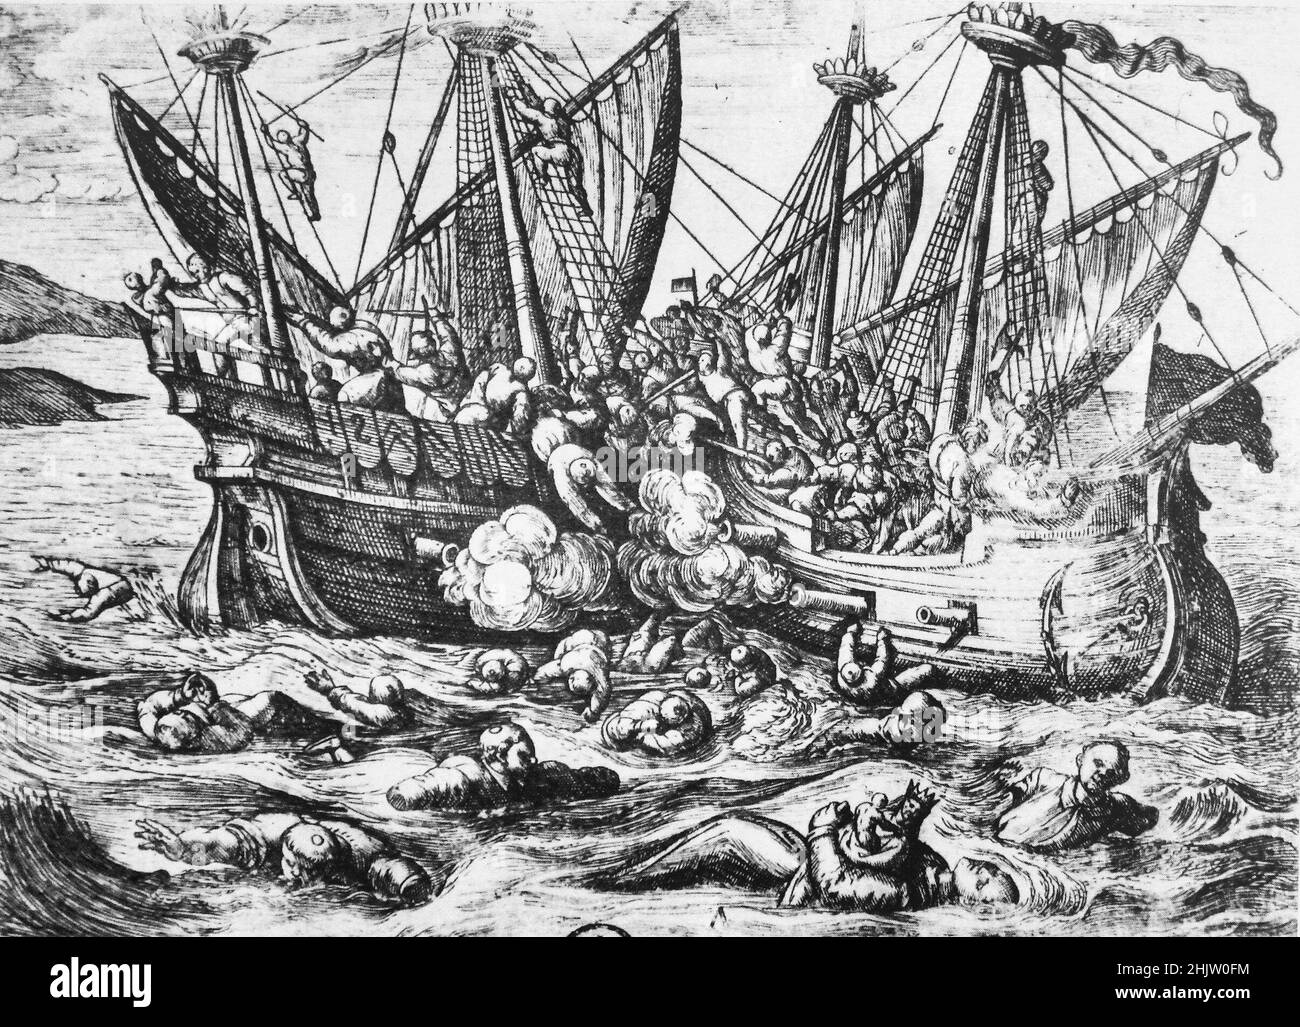 Imprimé illustrant l'agression de Huguenot contre les catholiques en mer. Banque D'Images